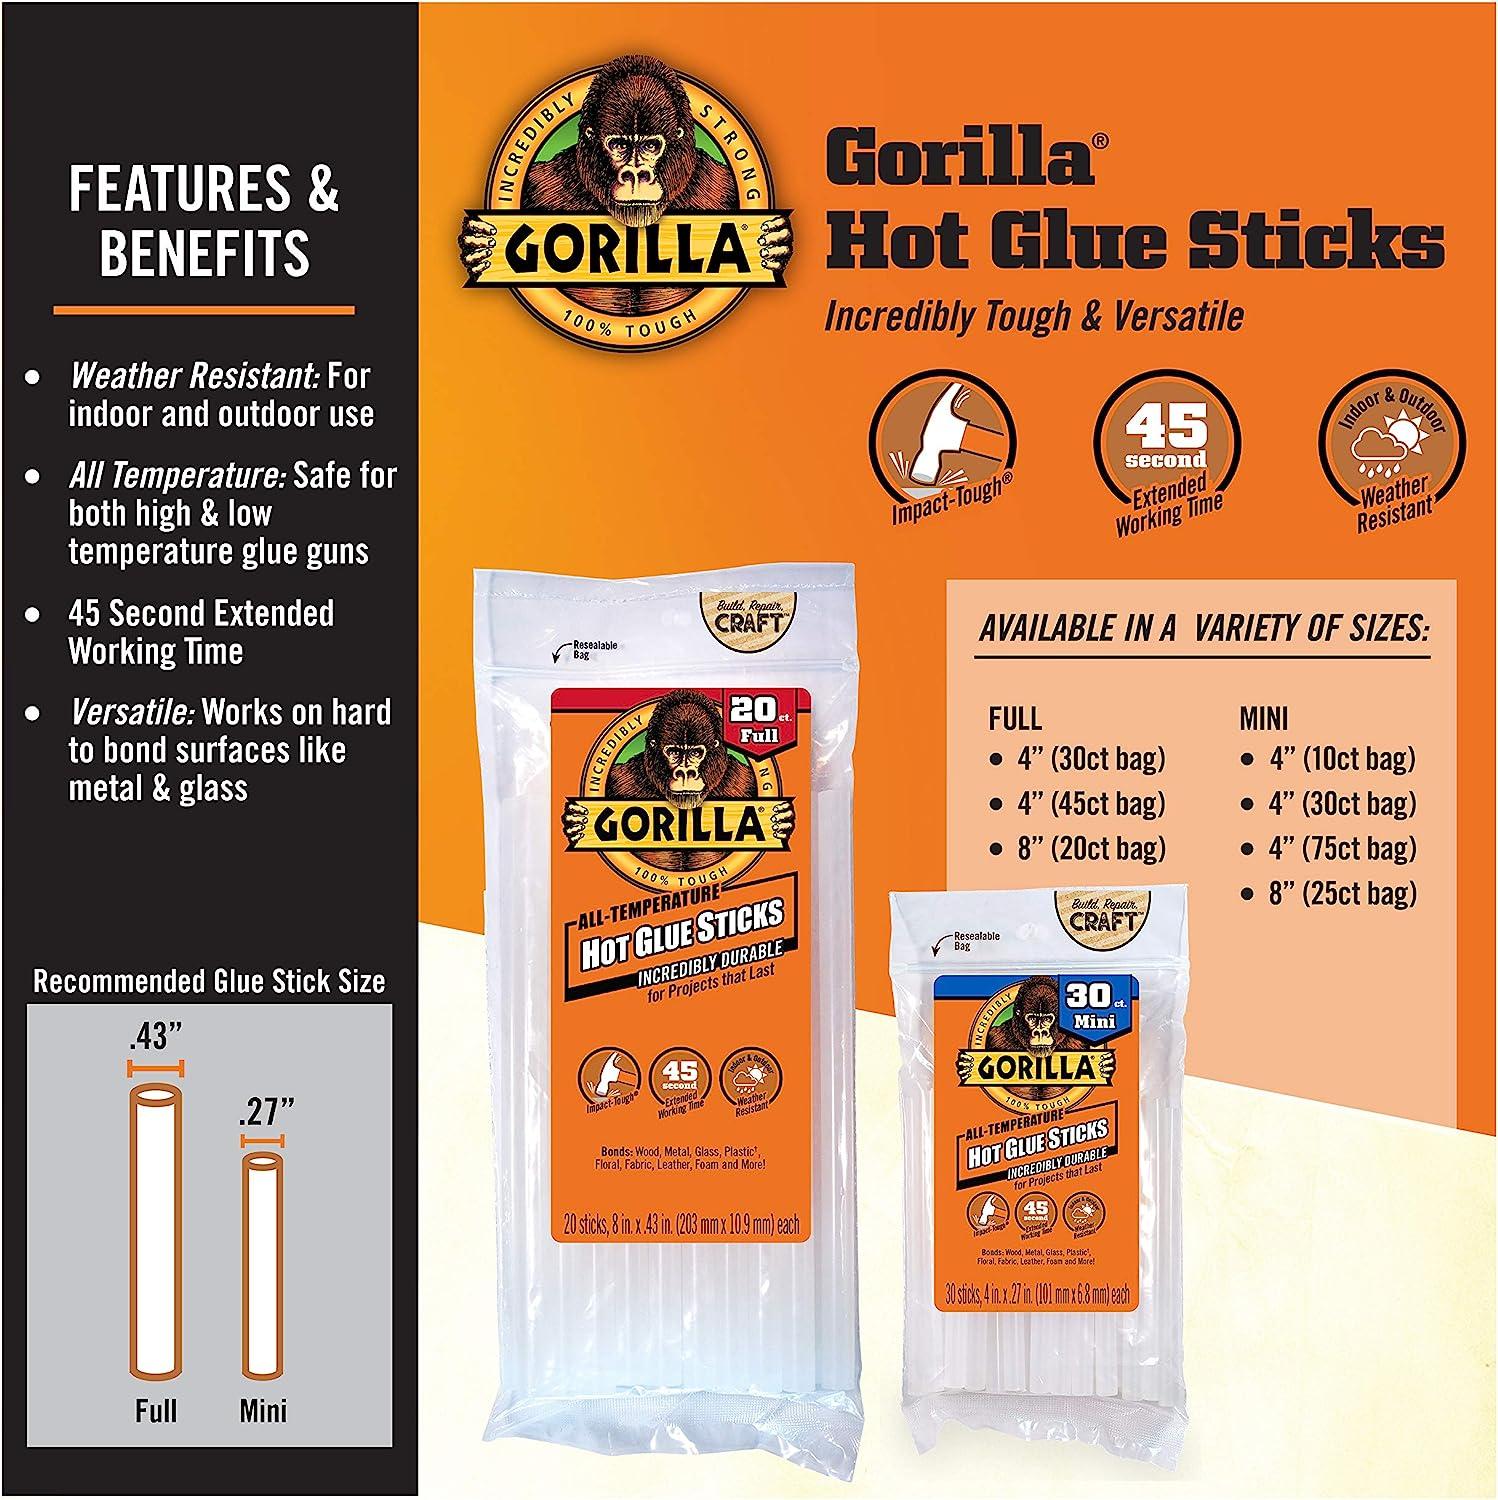 Full-Size Gorilla Hot Glue Gun Review! (The Best Hot Glue Gun